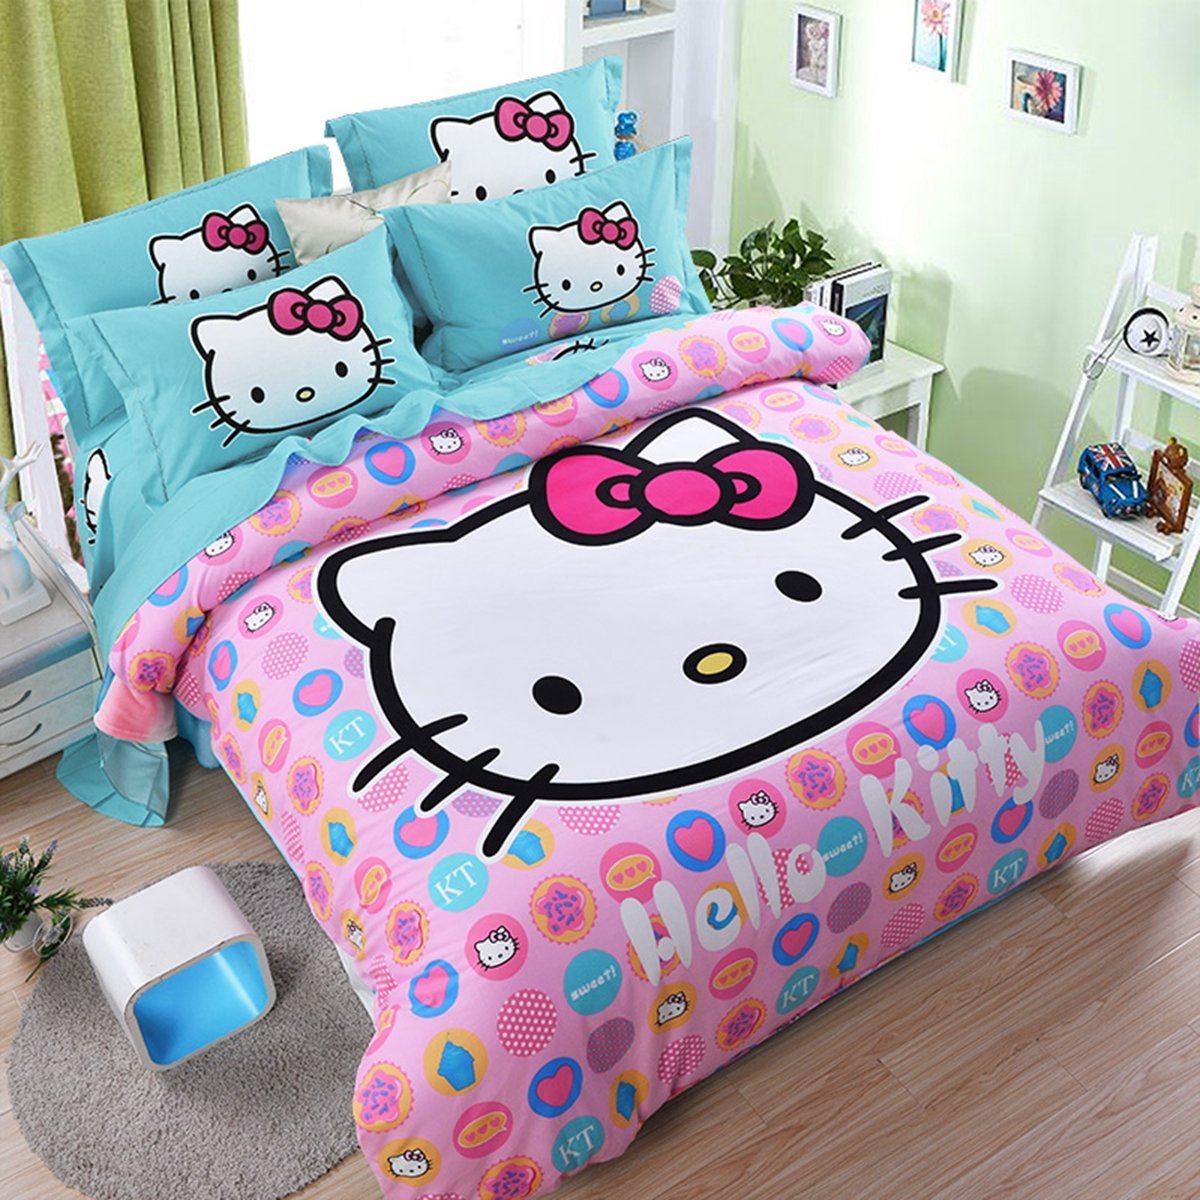 10 Best Hello Kitty Bedding Sets